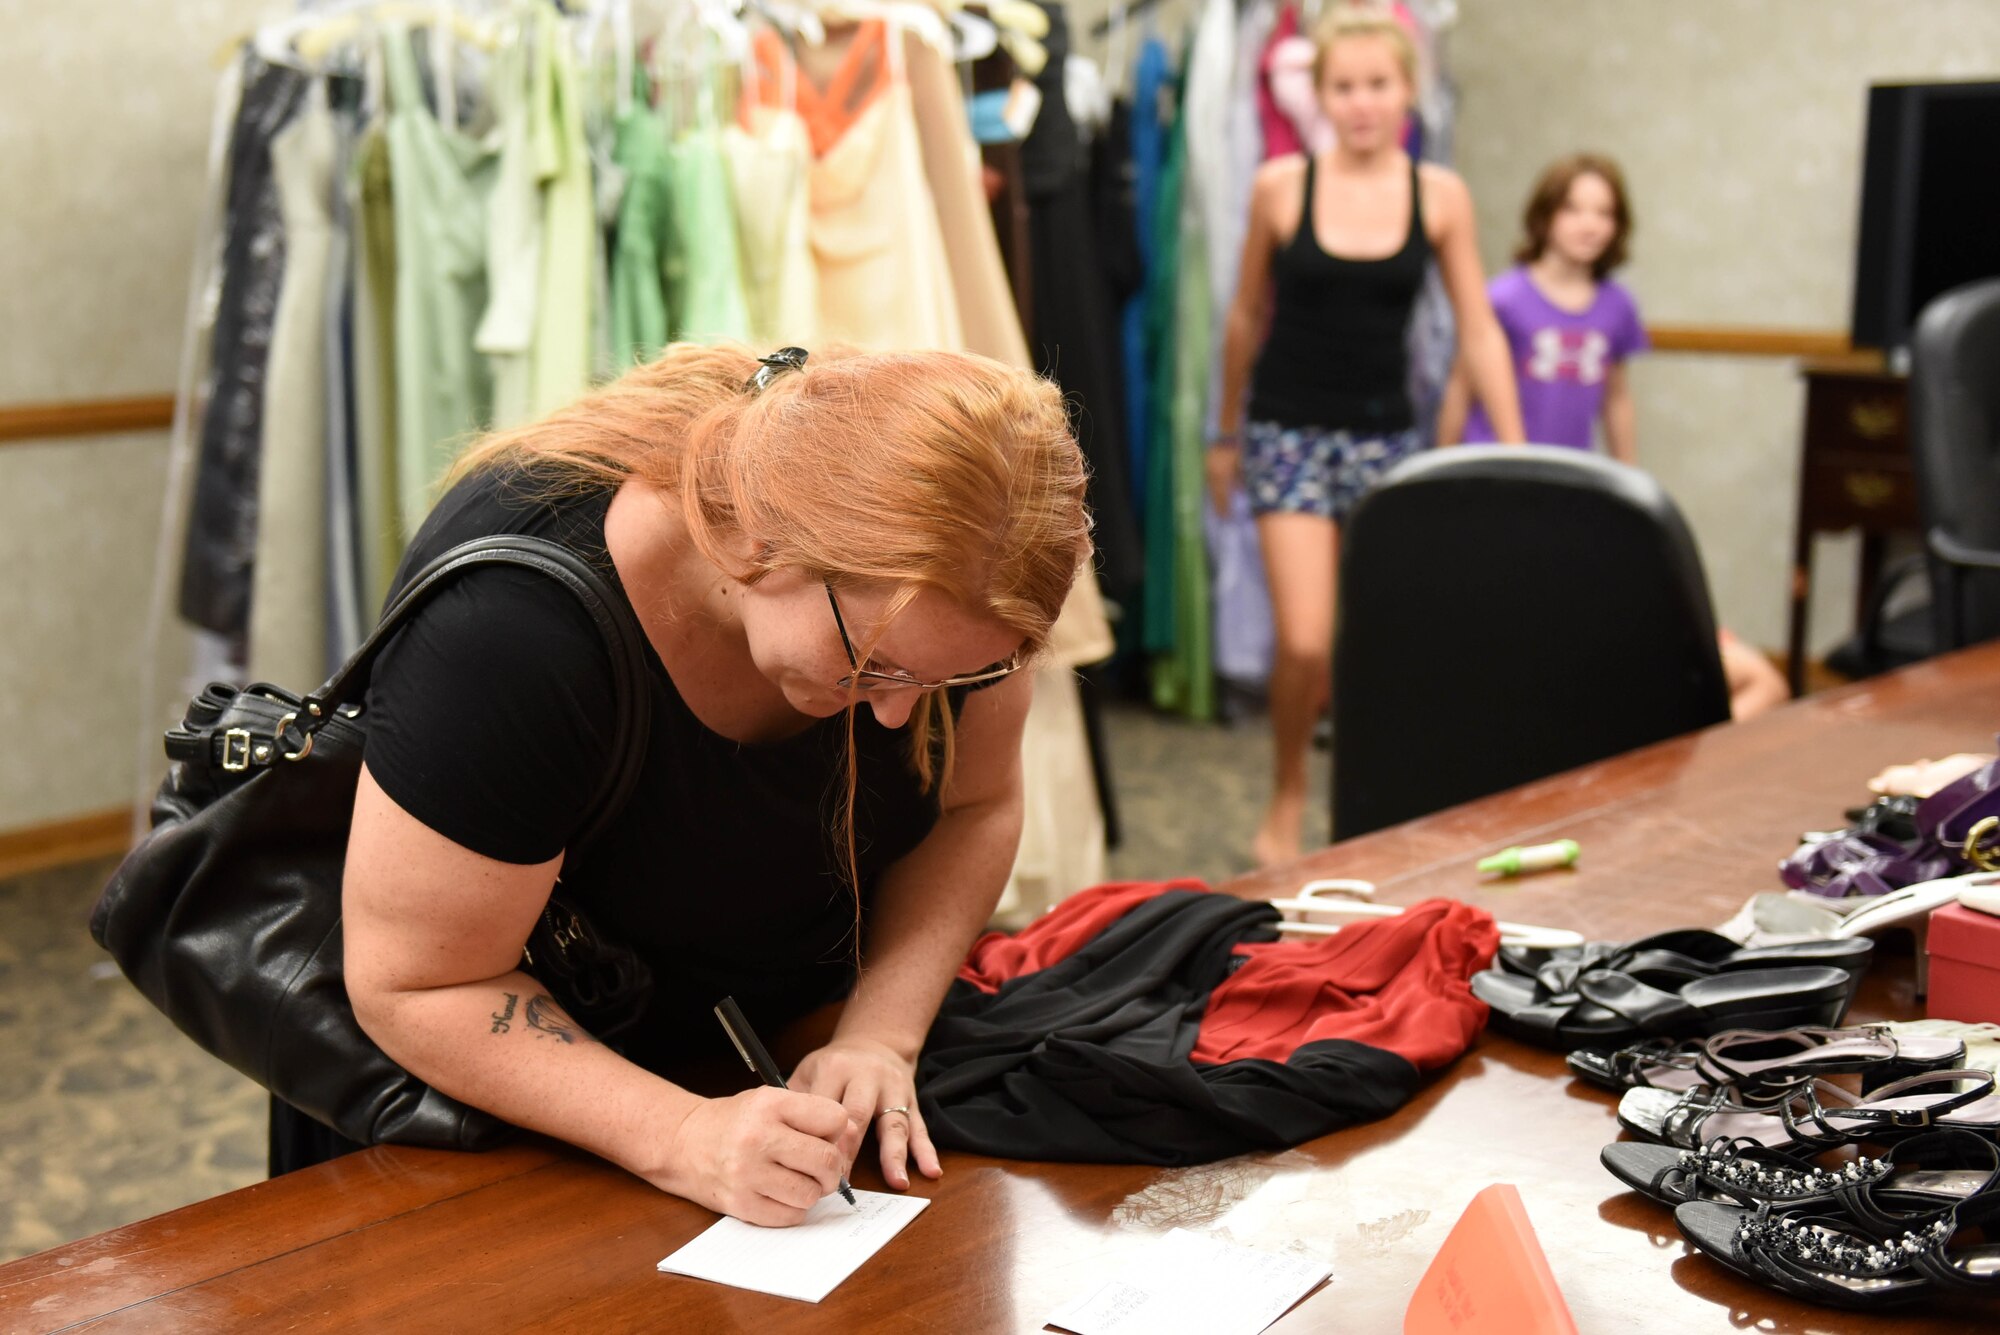 Kimberly Jones fills out a form to borrow a dress from the Cinderella’s Closet program, Aug. 23, 2017, at Seymour Johnson Air Force Base, North Carolina.